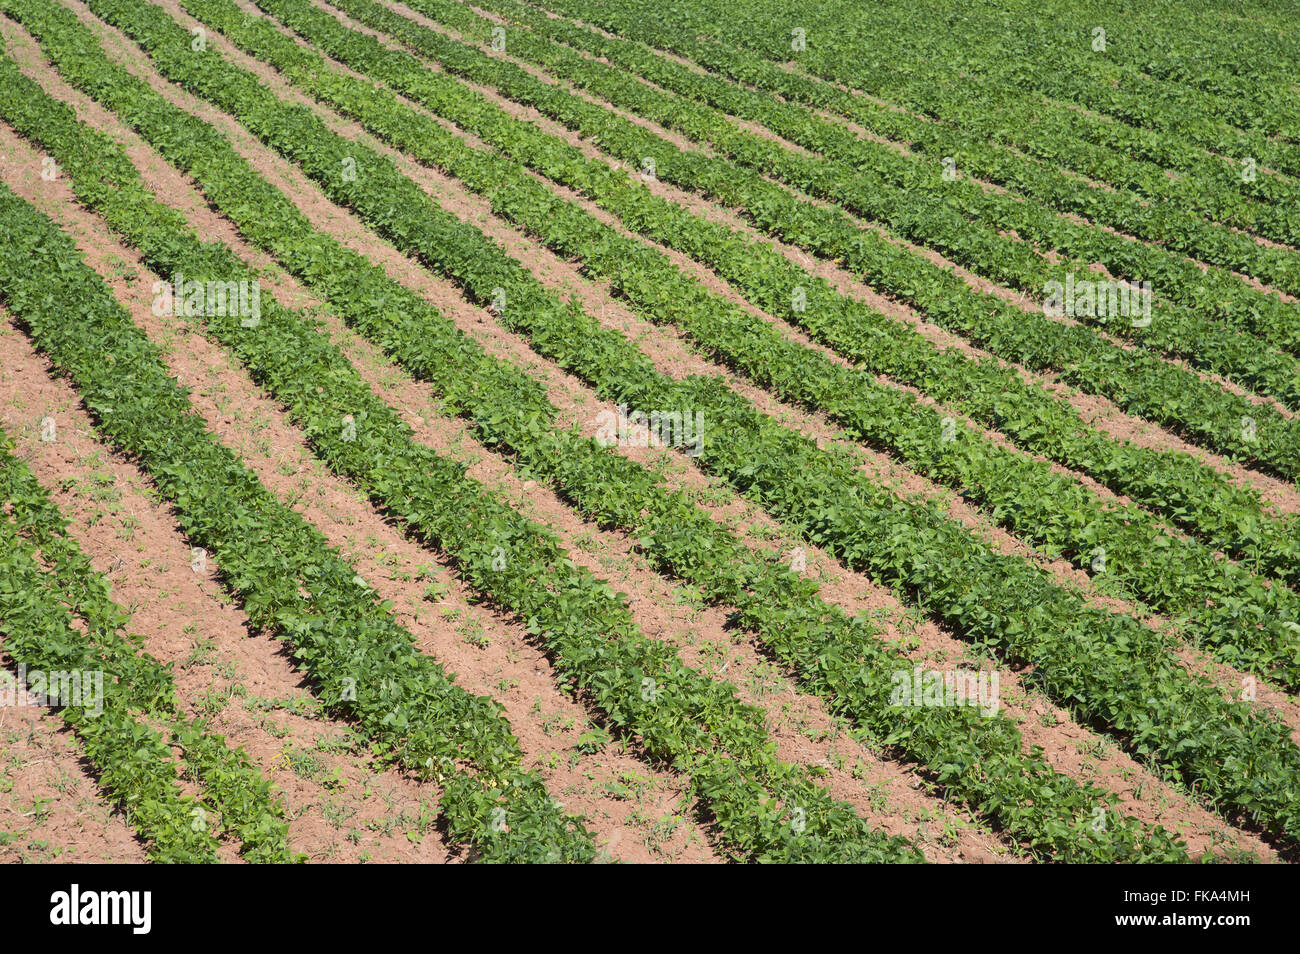 Irrigated bean plantation in rural town - western Bahia Stock Photo